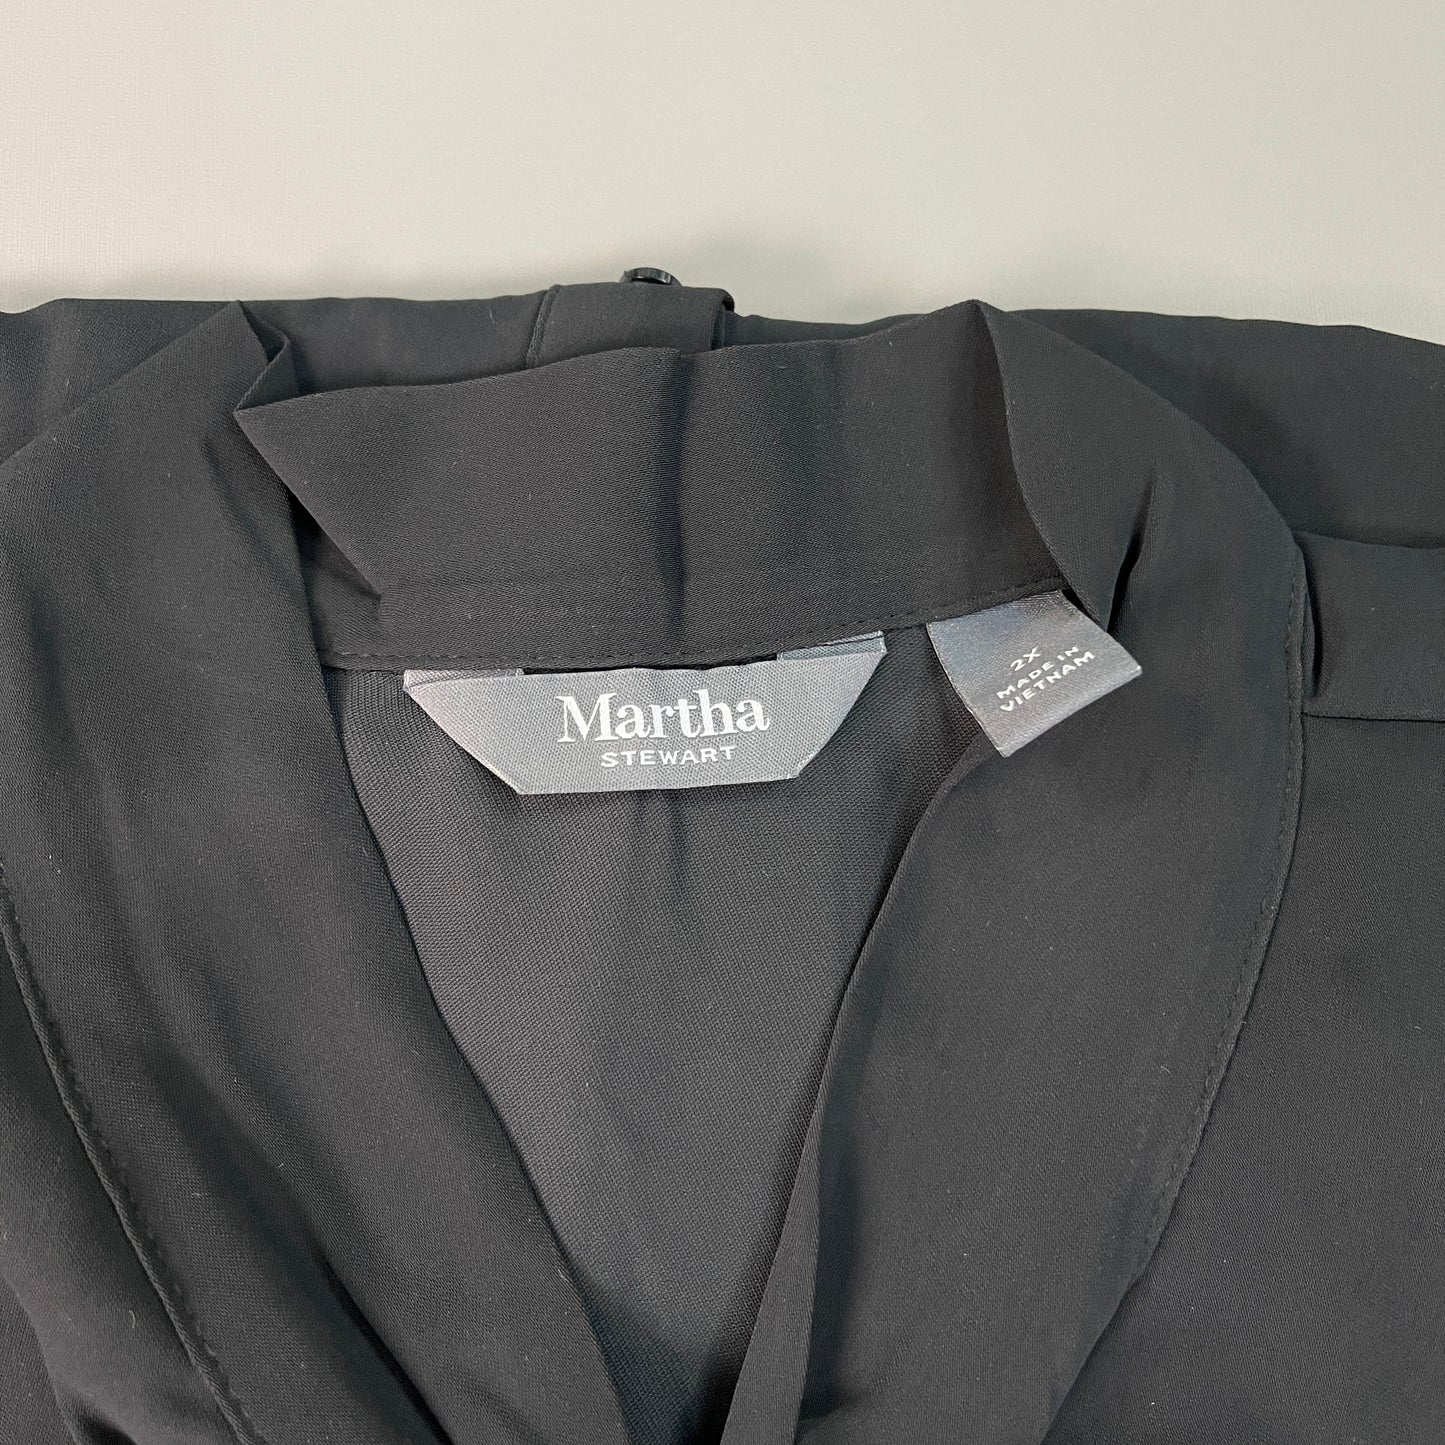 MARTHA STEWART Woven Front Button Blouse Top Tie Neck Women's Sz 2X Francesca Black (New)